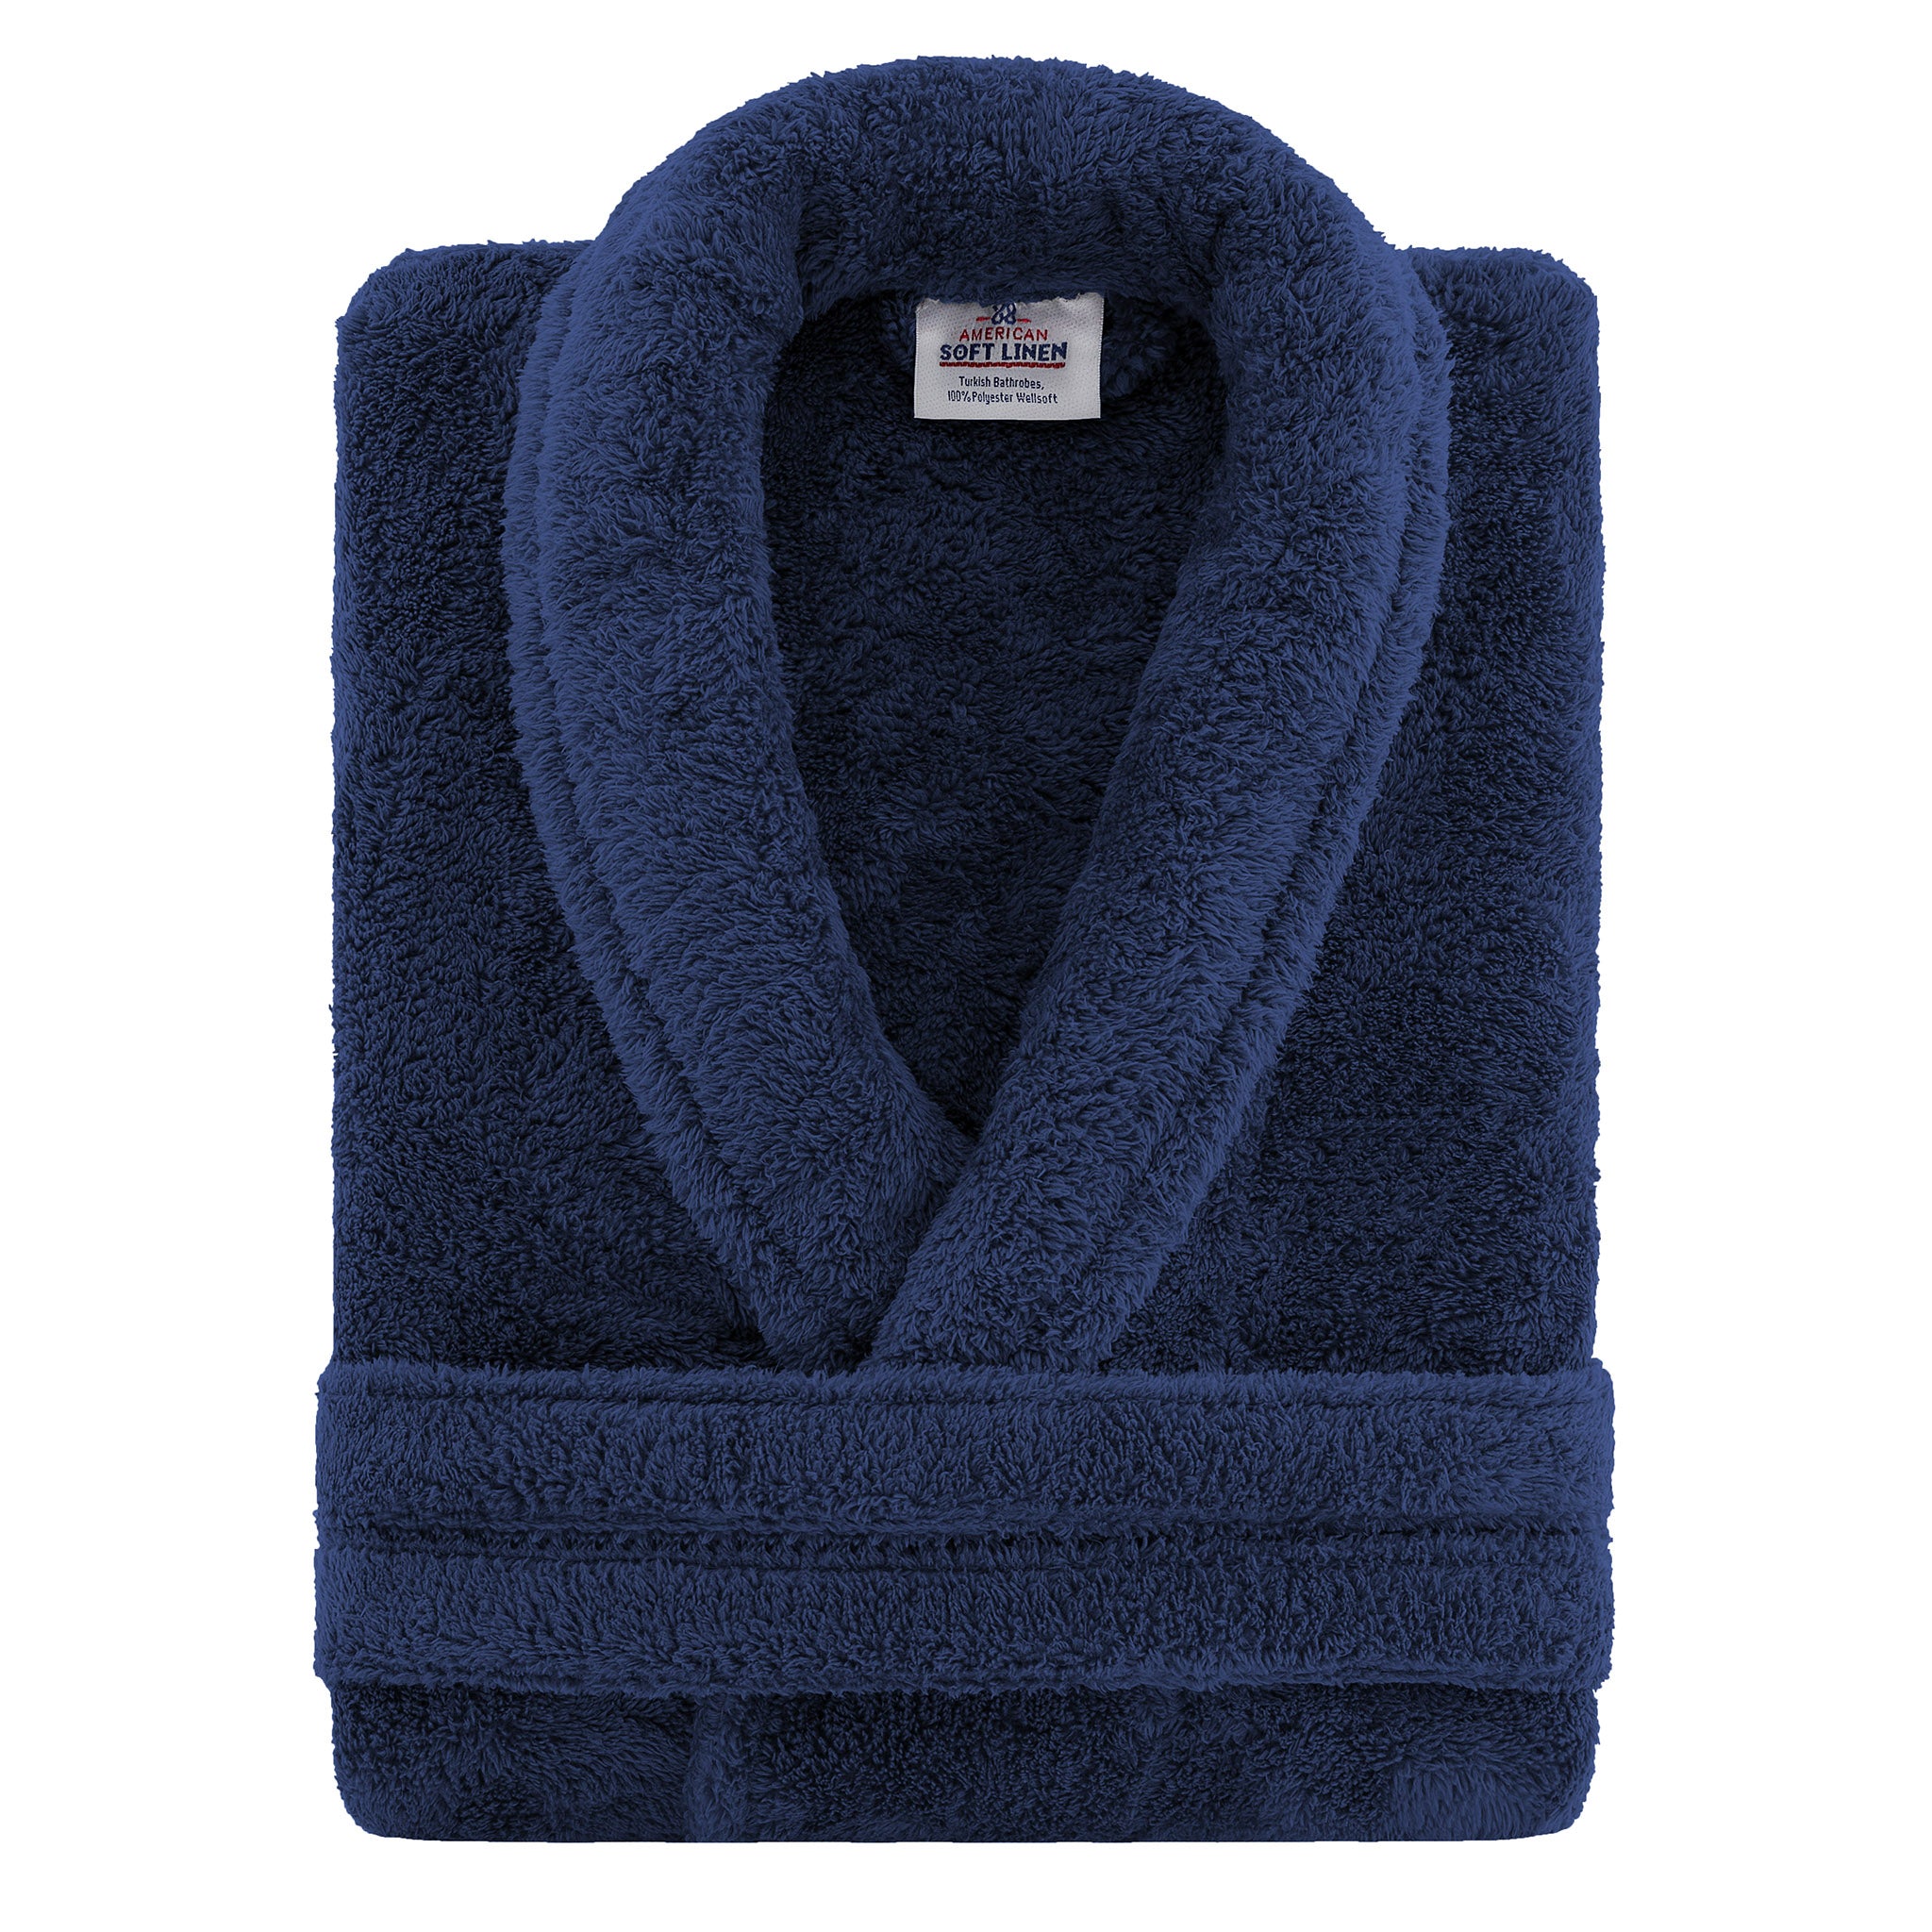 American Soft Linen Super Soft, Absorbent and Fluffy, Unisex Fleece Bathrobe M-L-navy-blue-3